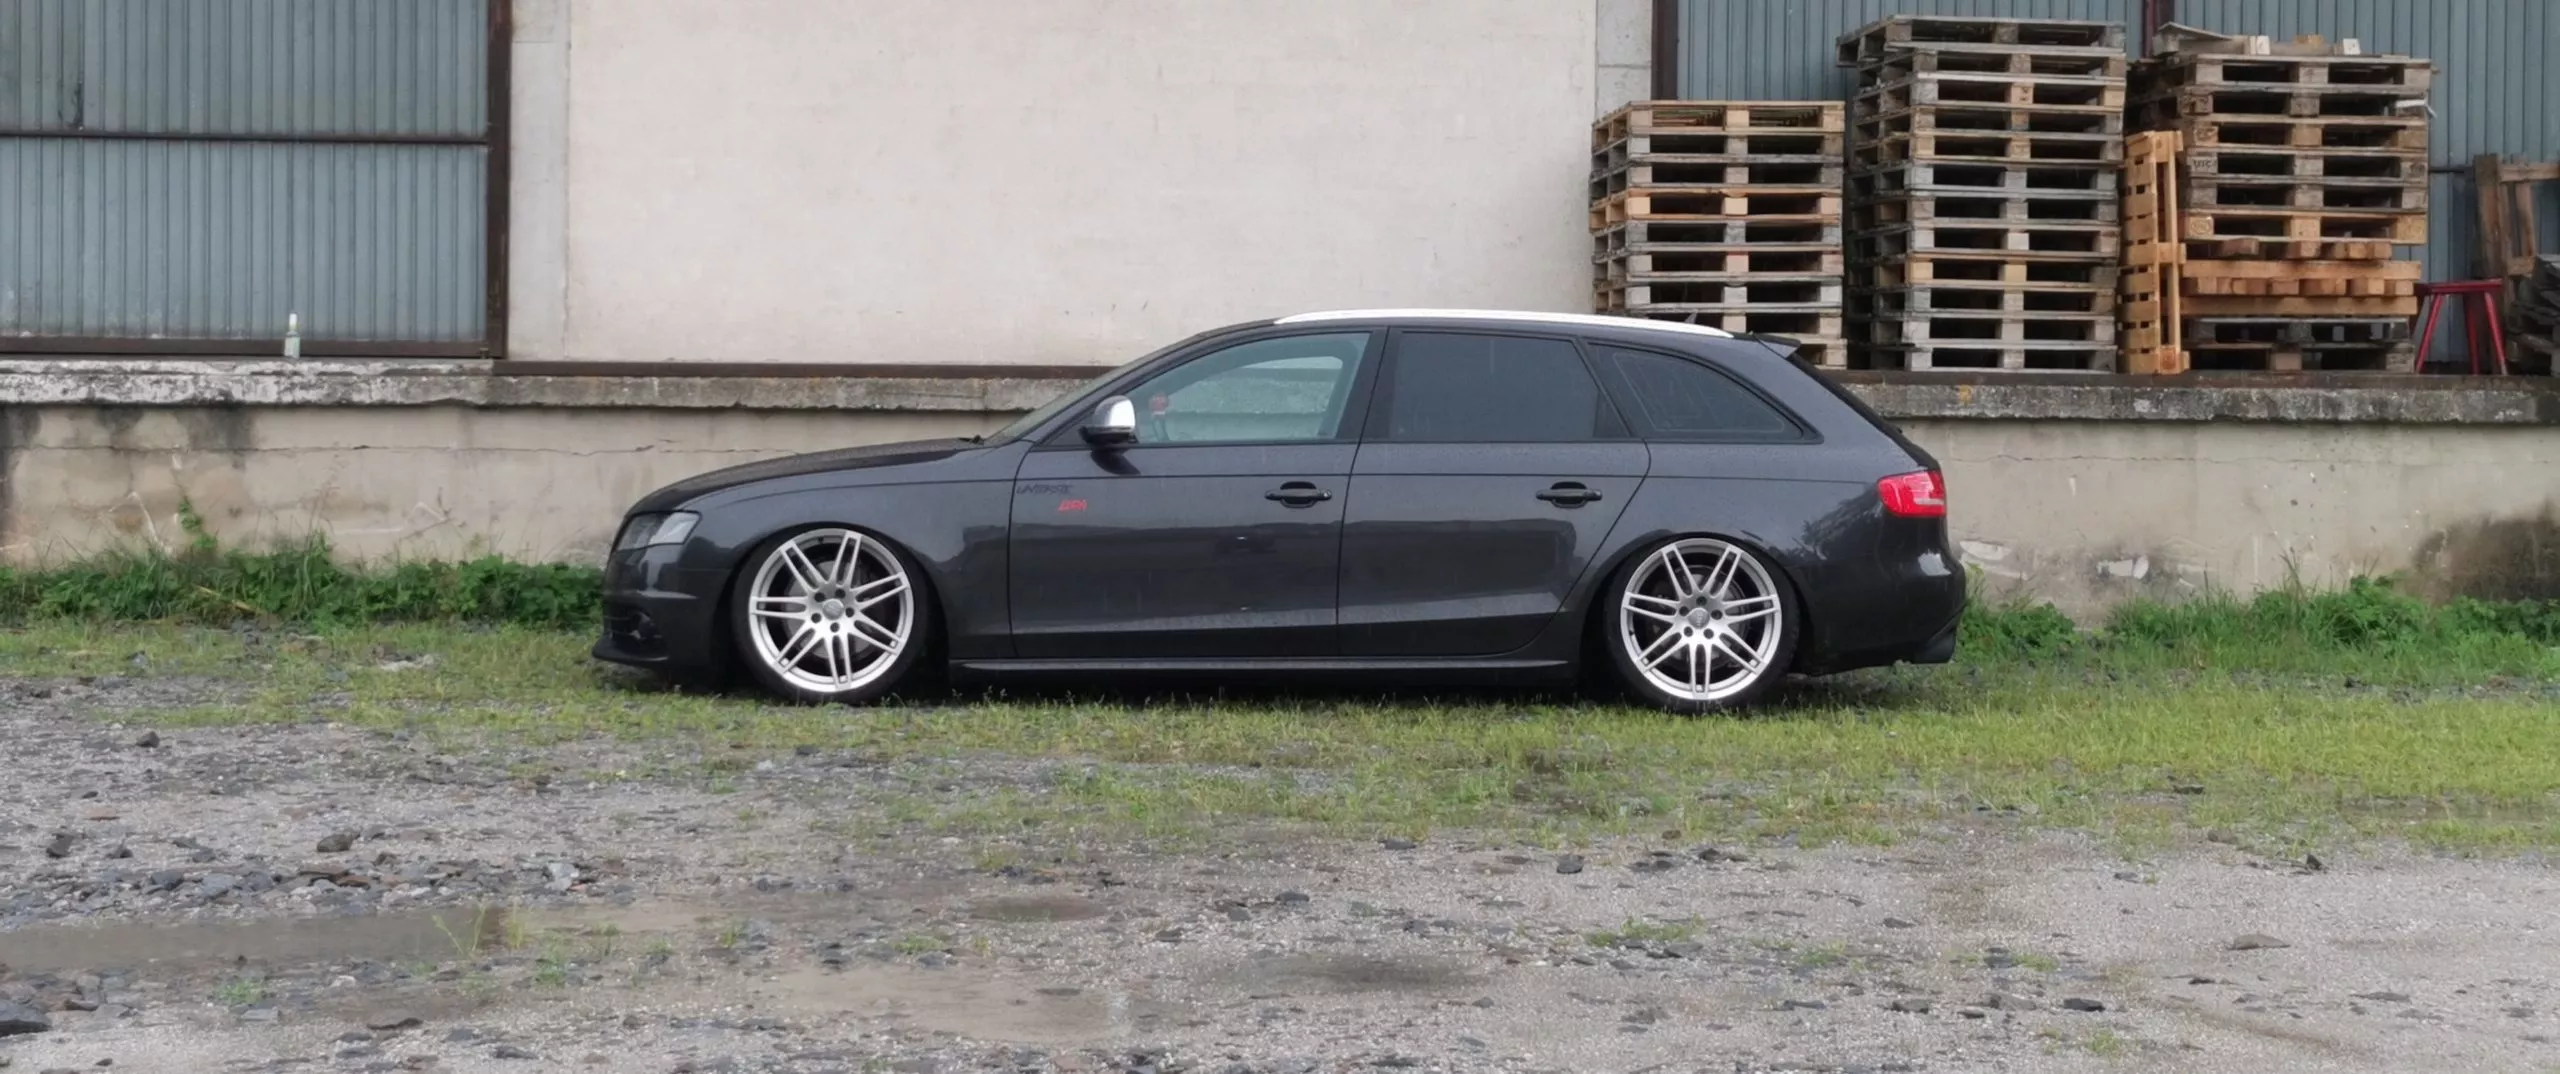 Audi – A4 – Speziallack – ORIGINAL AUDI – 7-Doppelspeichen-Design – Silber – 20 Zoll